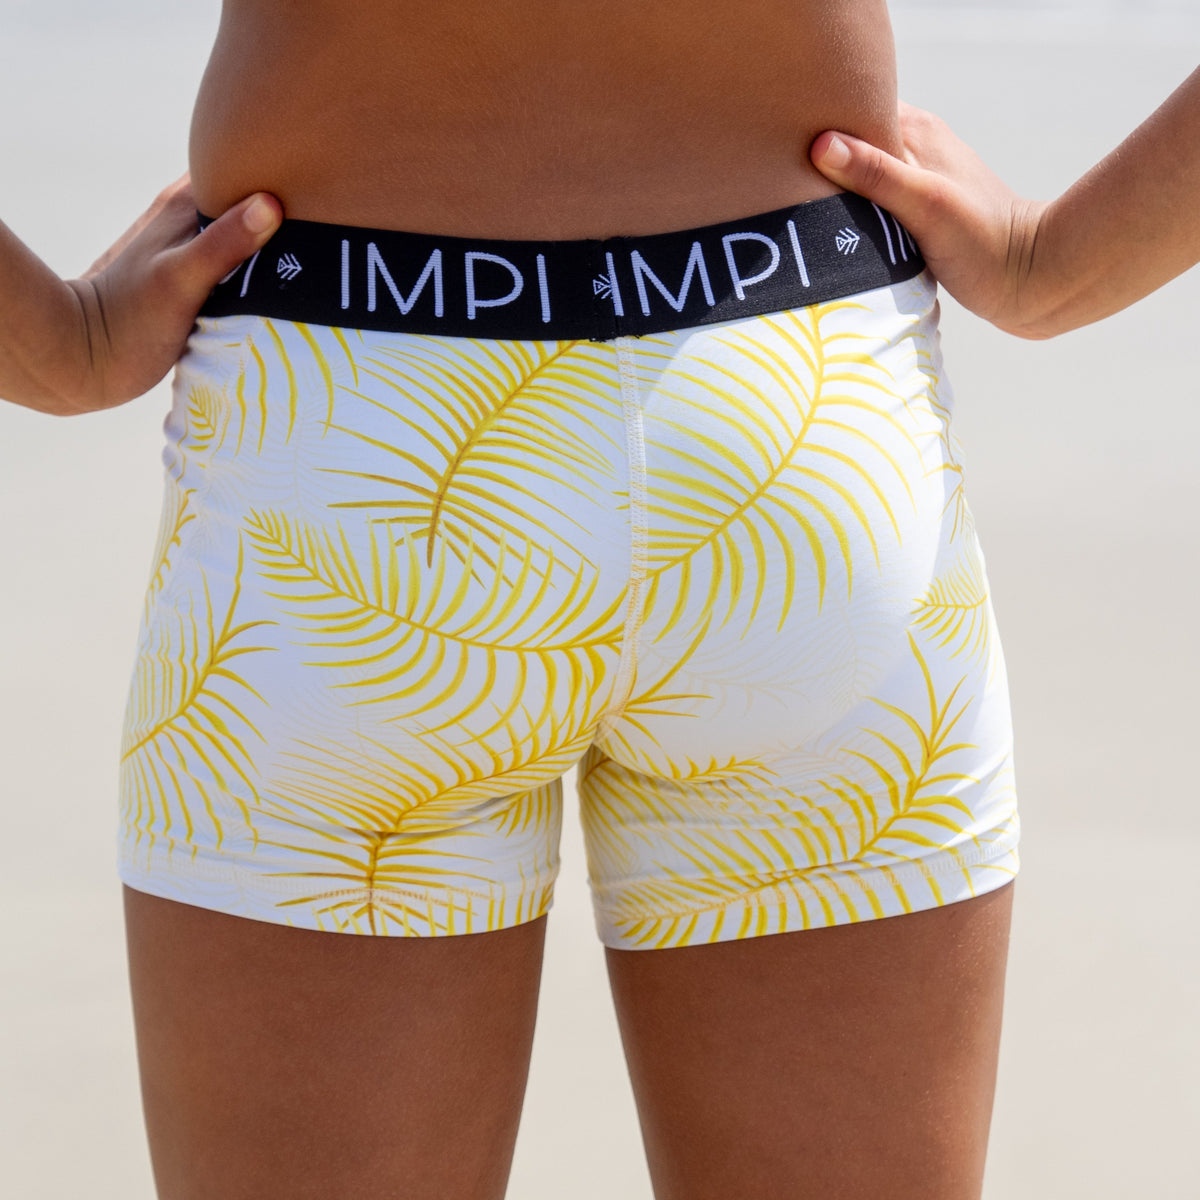 IMPI Elastic Running Shorts - Yellow Palm